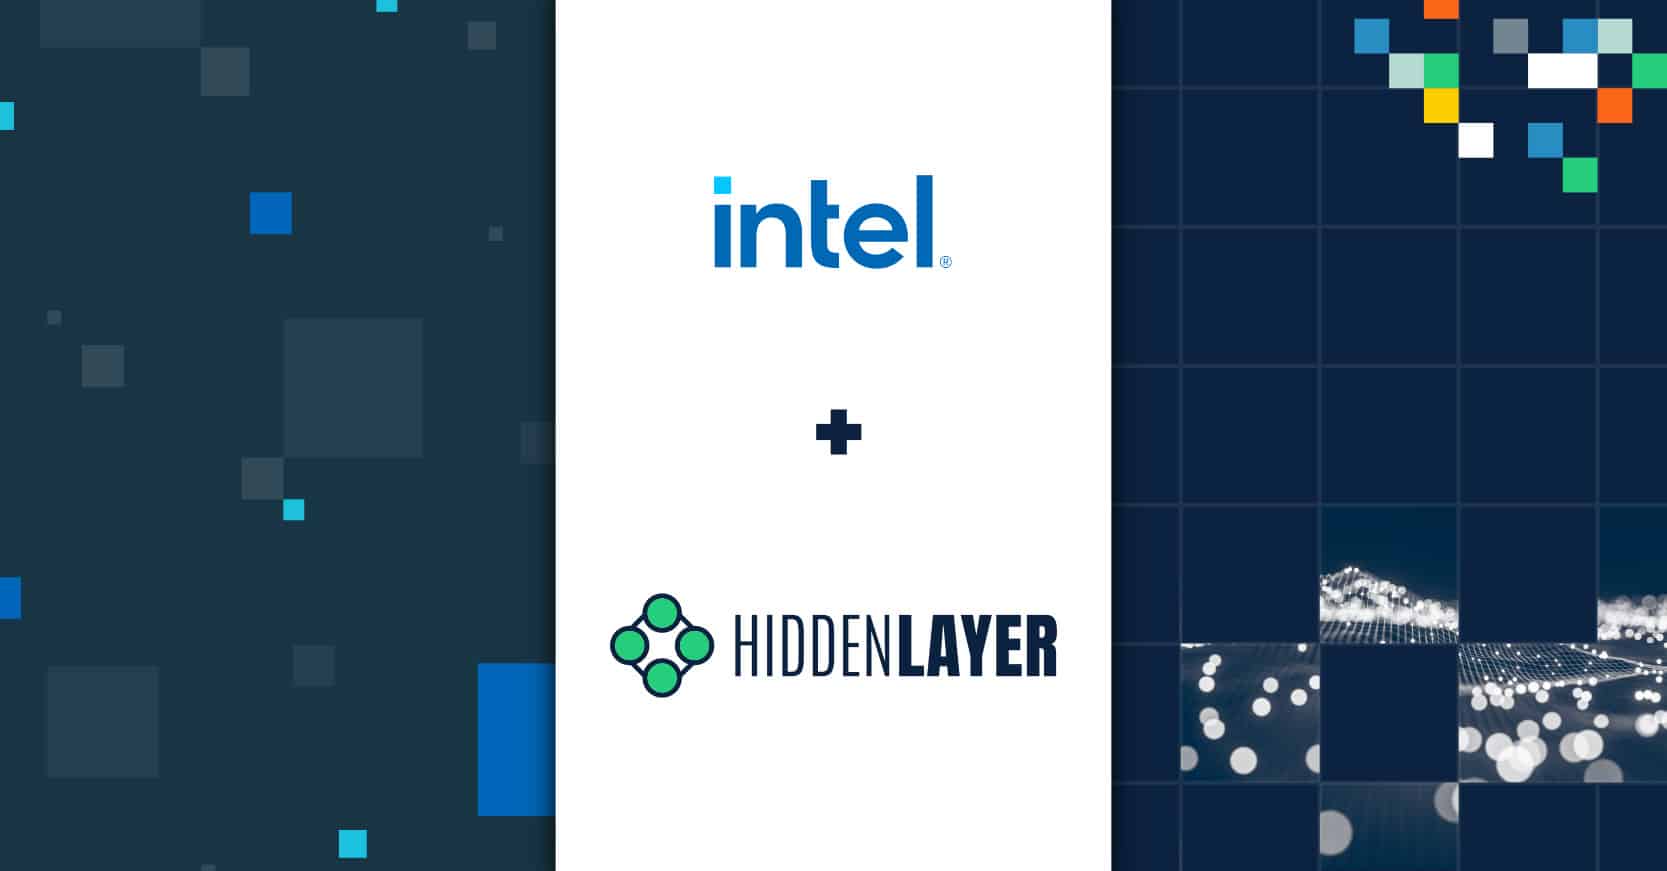 Intel and HiddenLayer logos